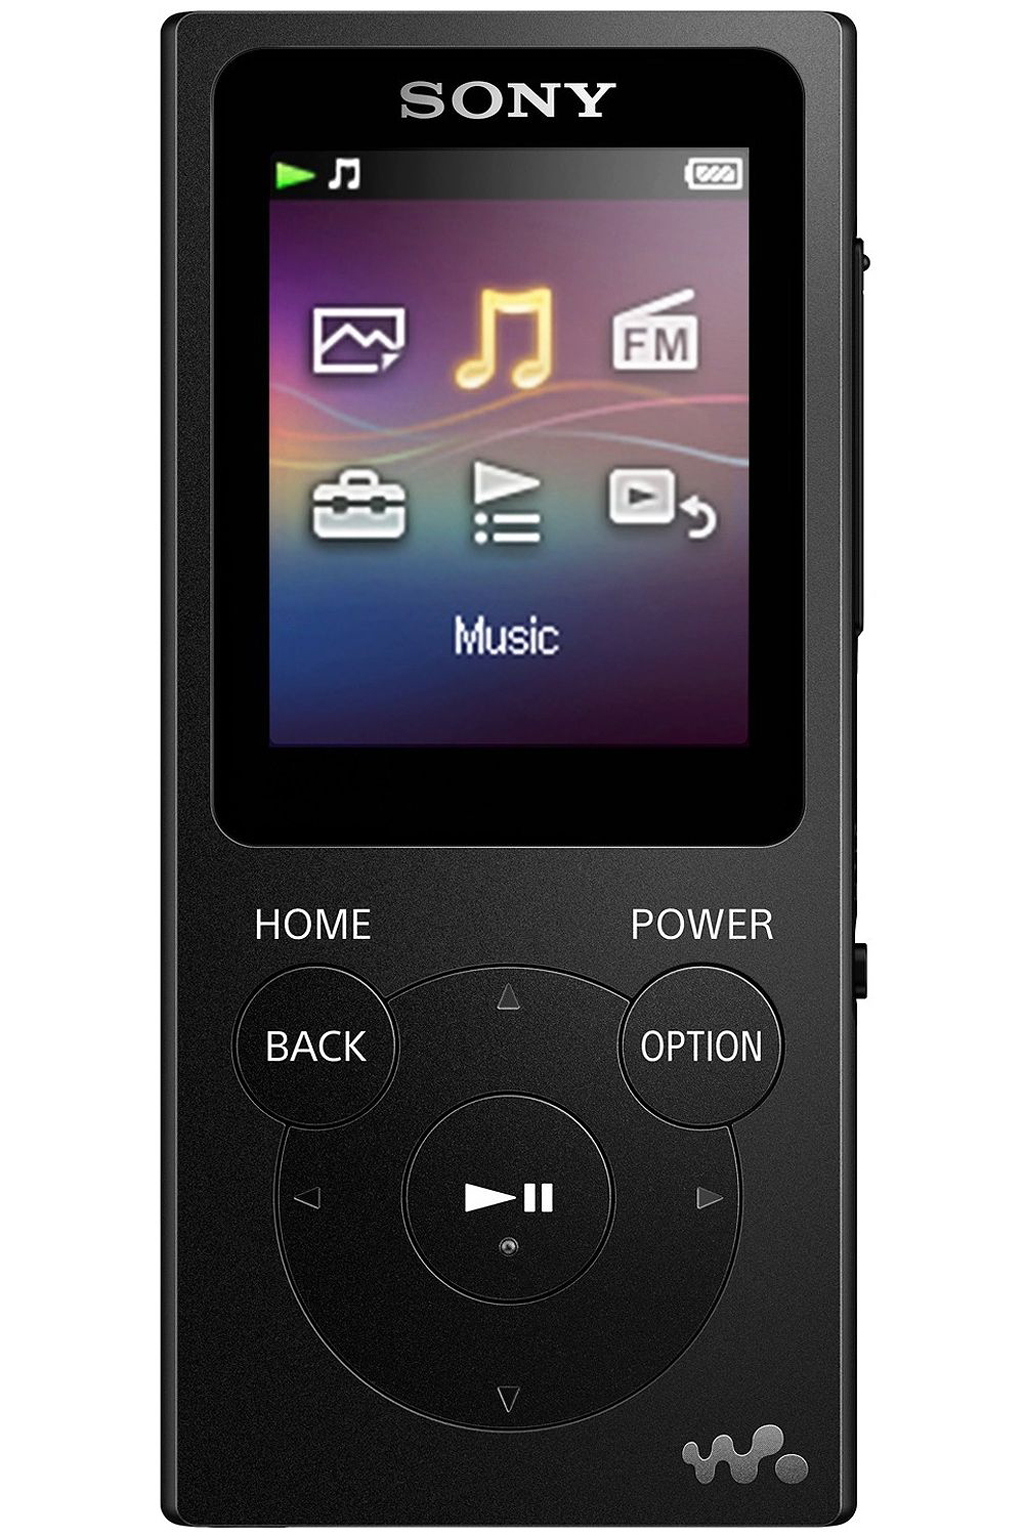 NO.2索尼 NW-E390系列
作为曾经随身听的发明者，索尼在音乐播放器方面拥有强大的产品线和经验，同时依然坚守在音乐播放器的市场。索尼 NW-E390系列就是一款坚守的产品，整体设计风格简单，方便使用，可以播放35个小时，这样可以把手机的播放功能通过音乐播放器完成，这样既可以享受音乐，又可以节省手机的电量。
参考价格：50美元（约合人民币337元）
